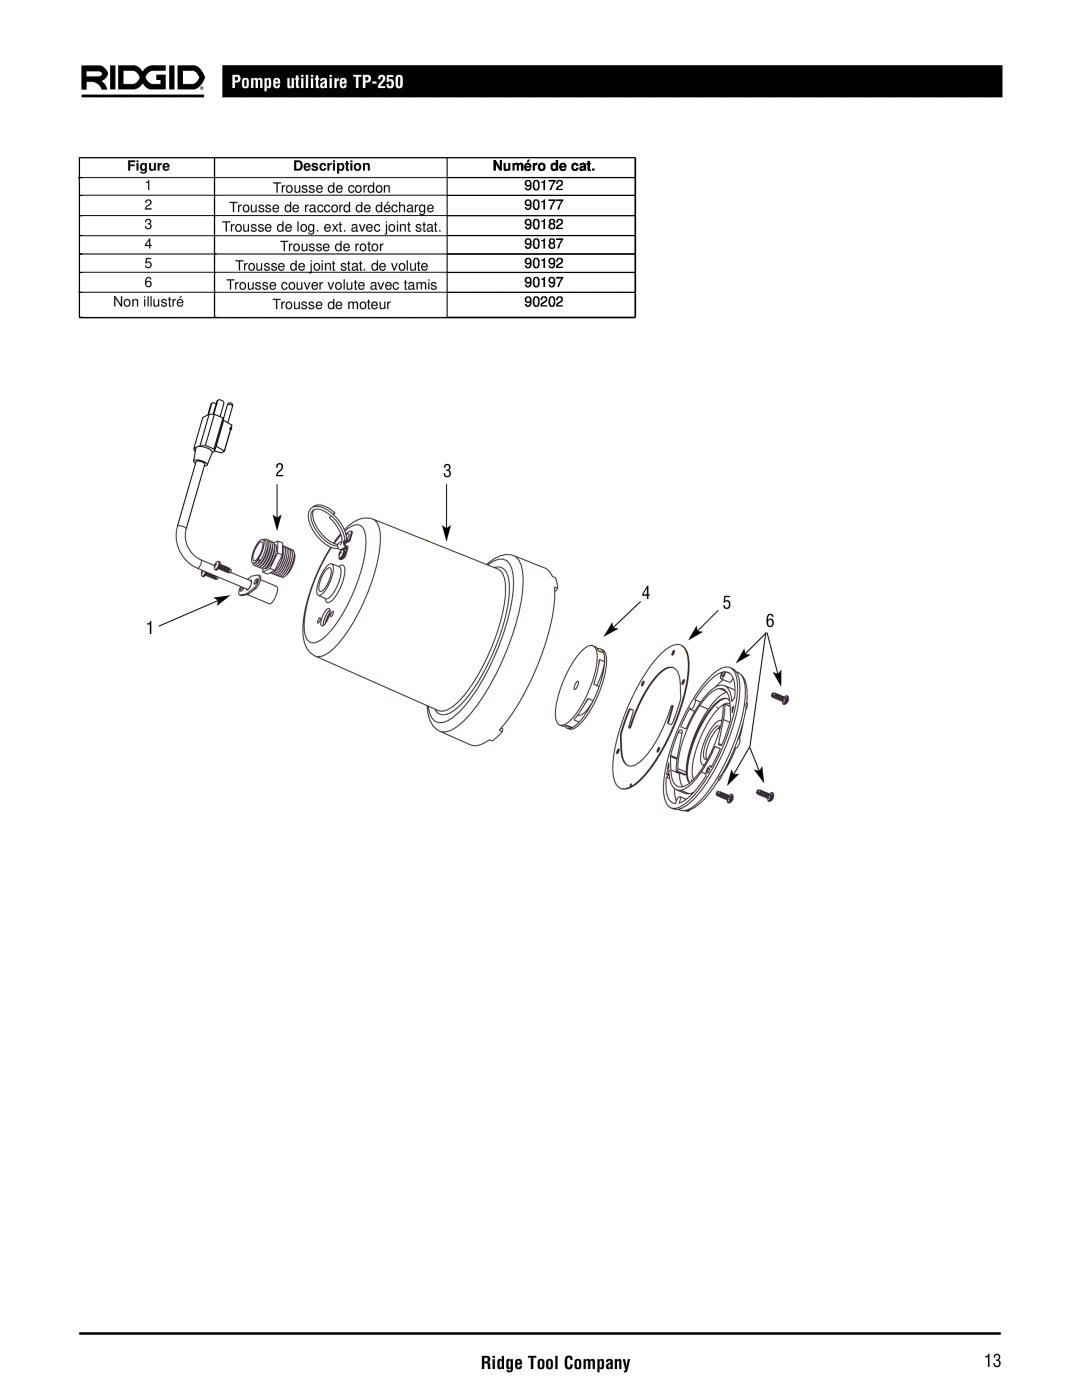 RIDGID manual Pompe utilitaire TP-250, Ridge Tool Company, Description, Numéro de cat 